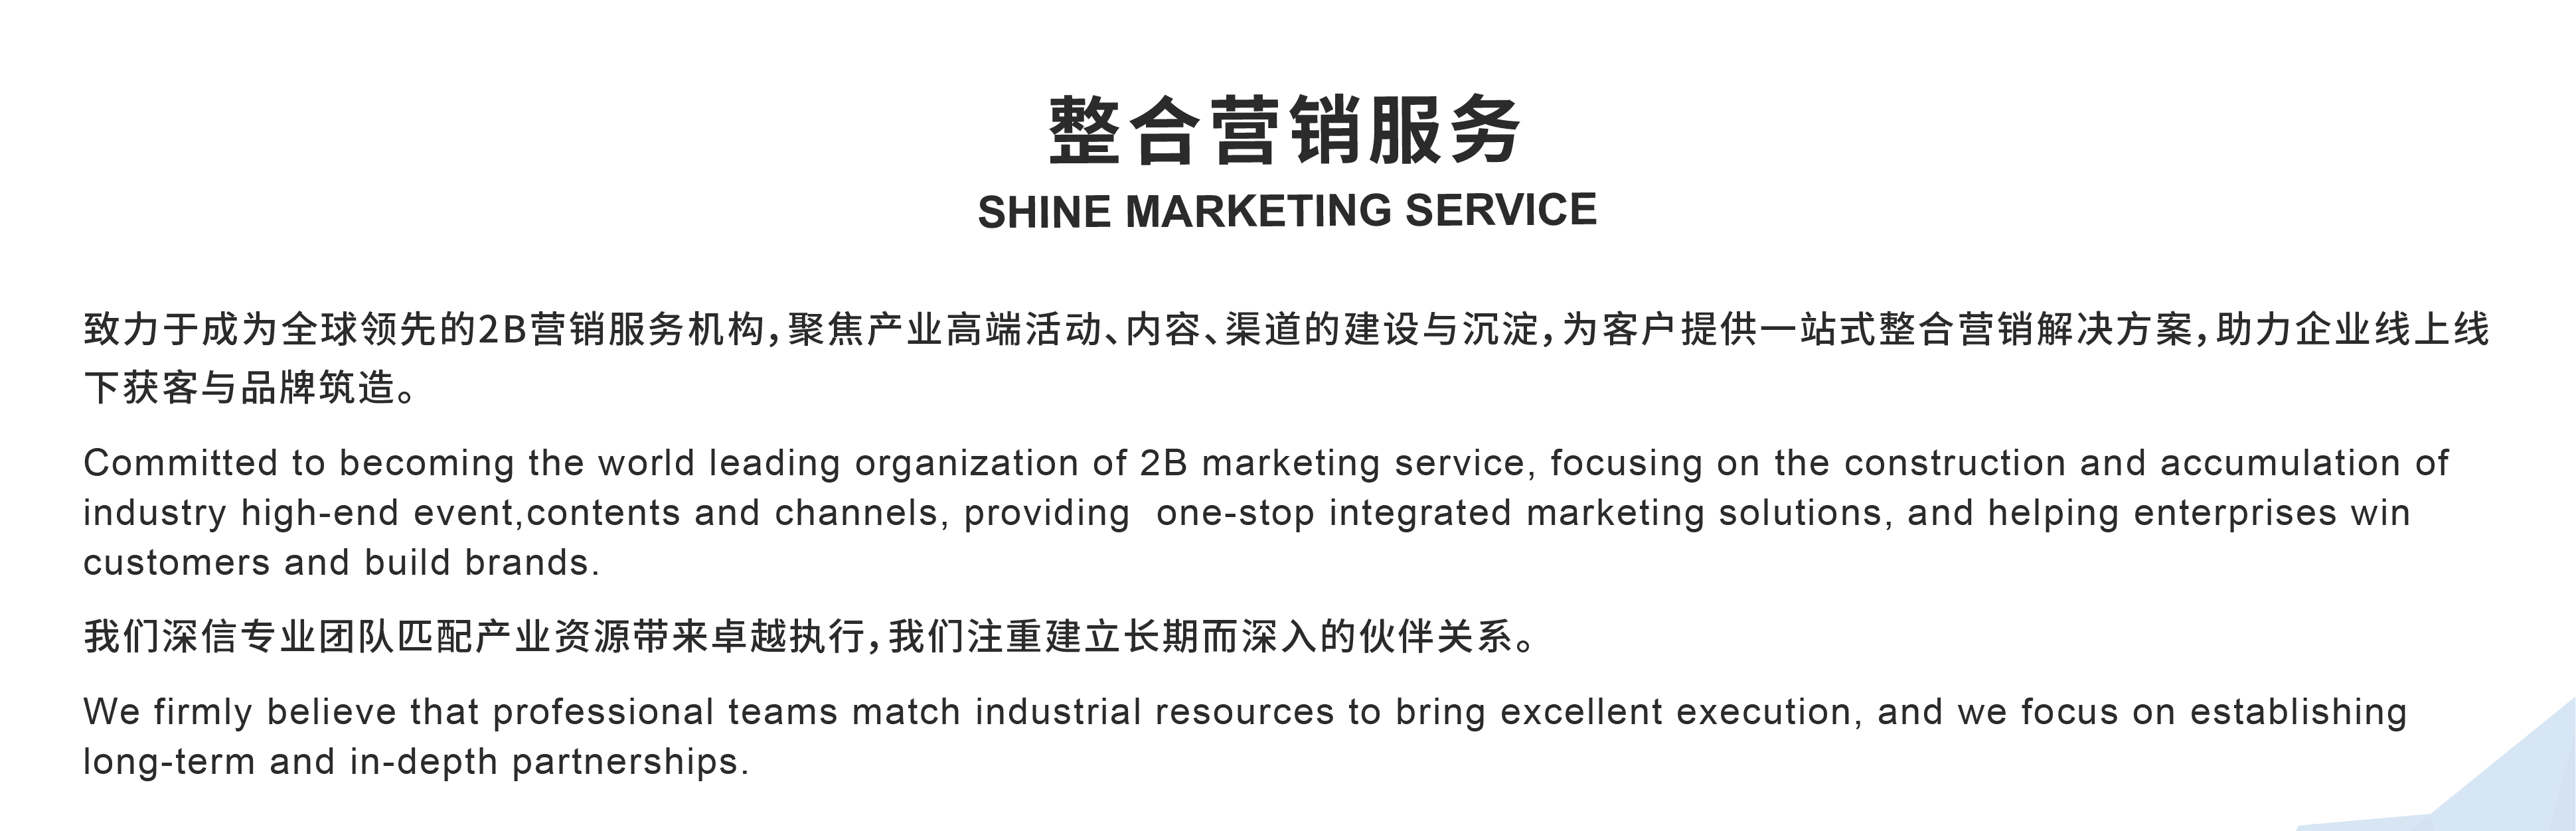 Shine Marketing Service